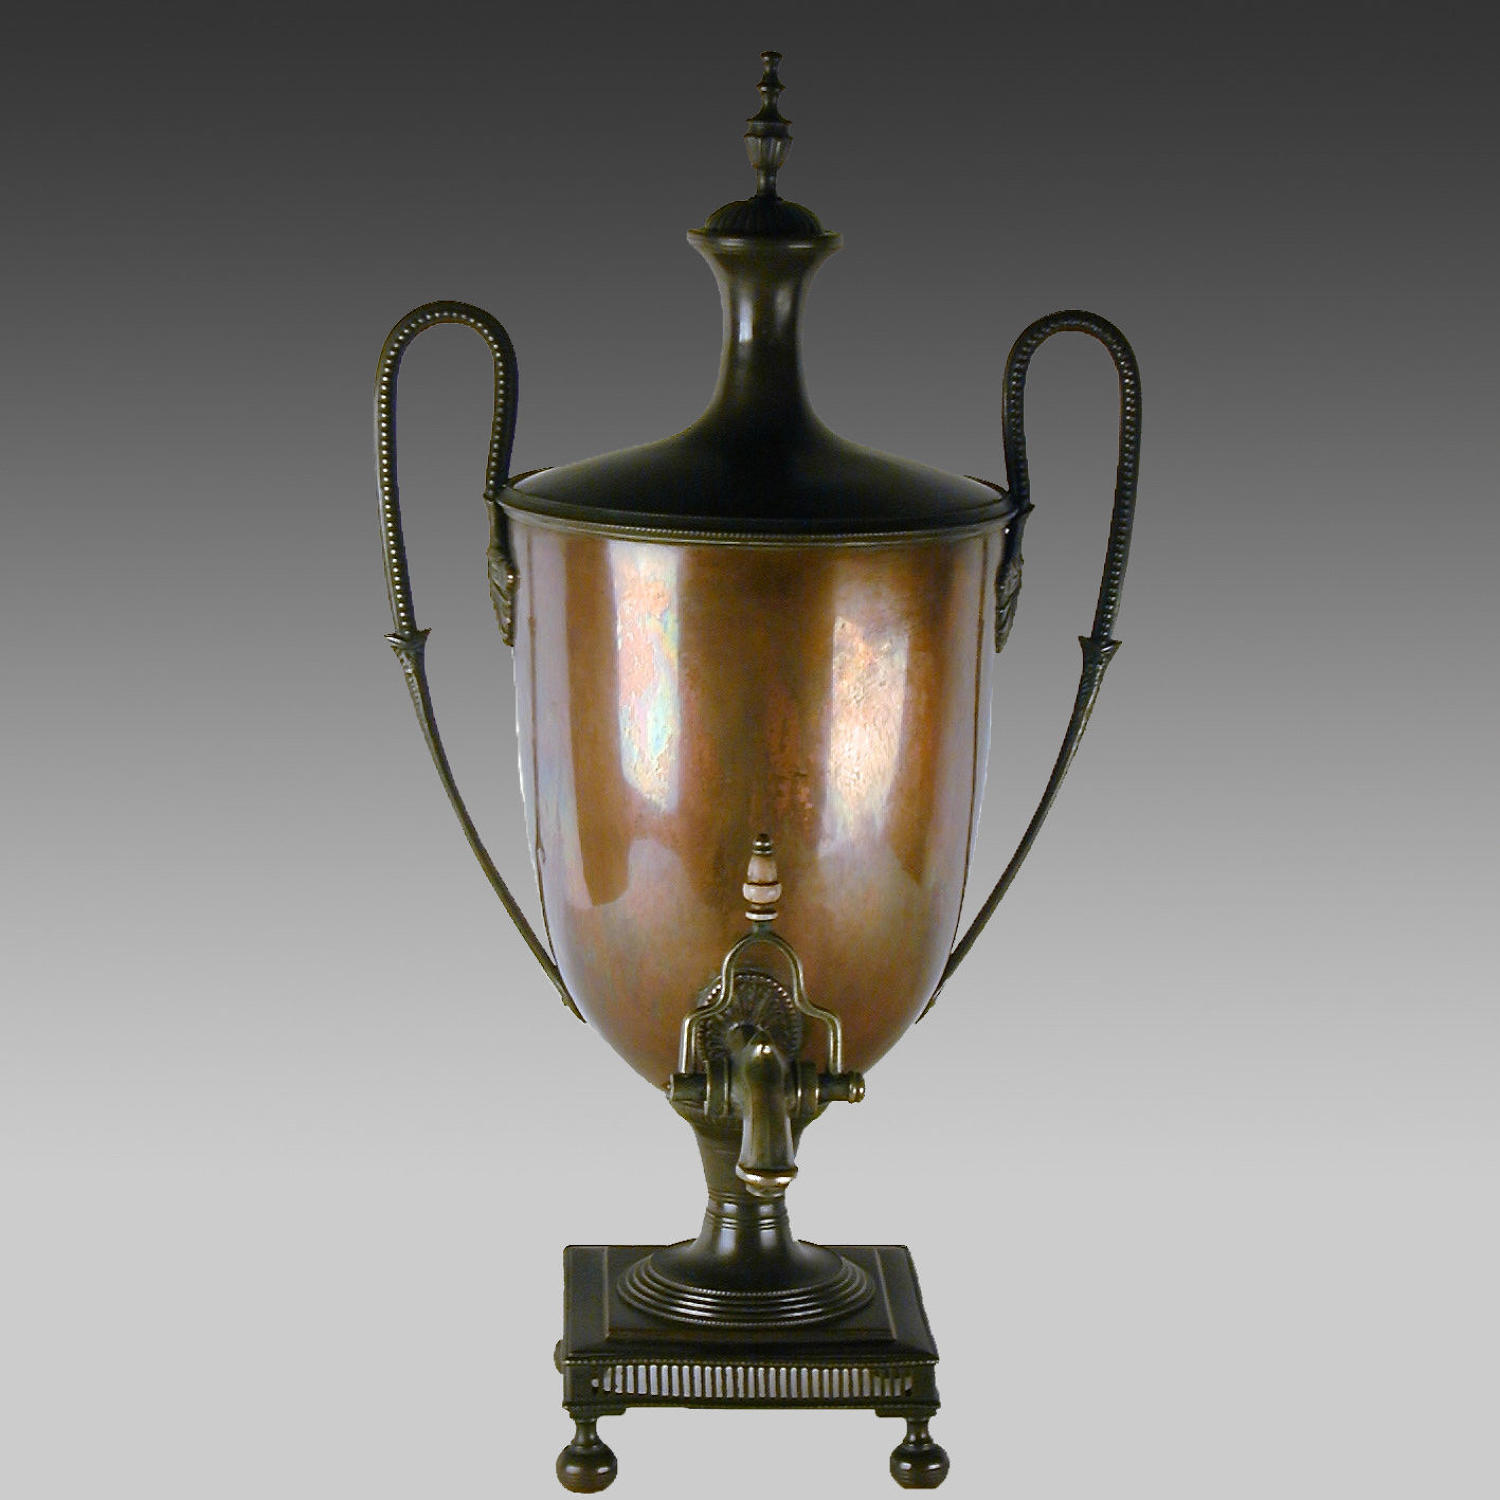 Antique Georgian copper samovar or tea urn